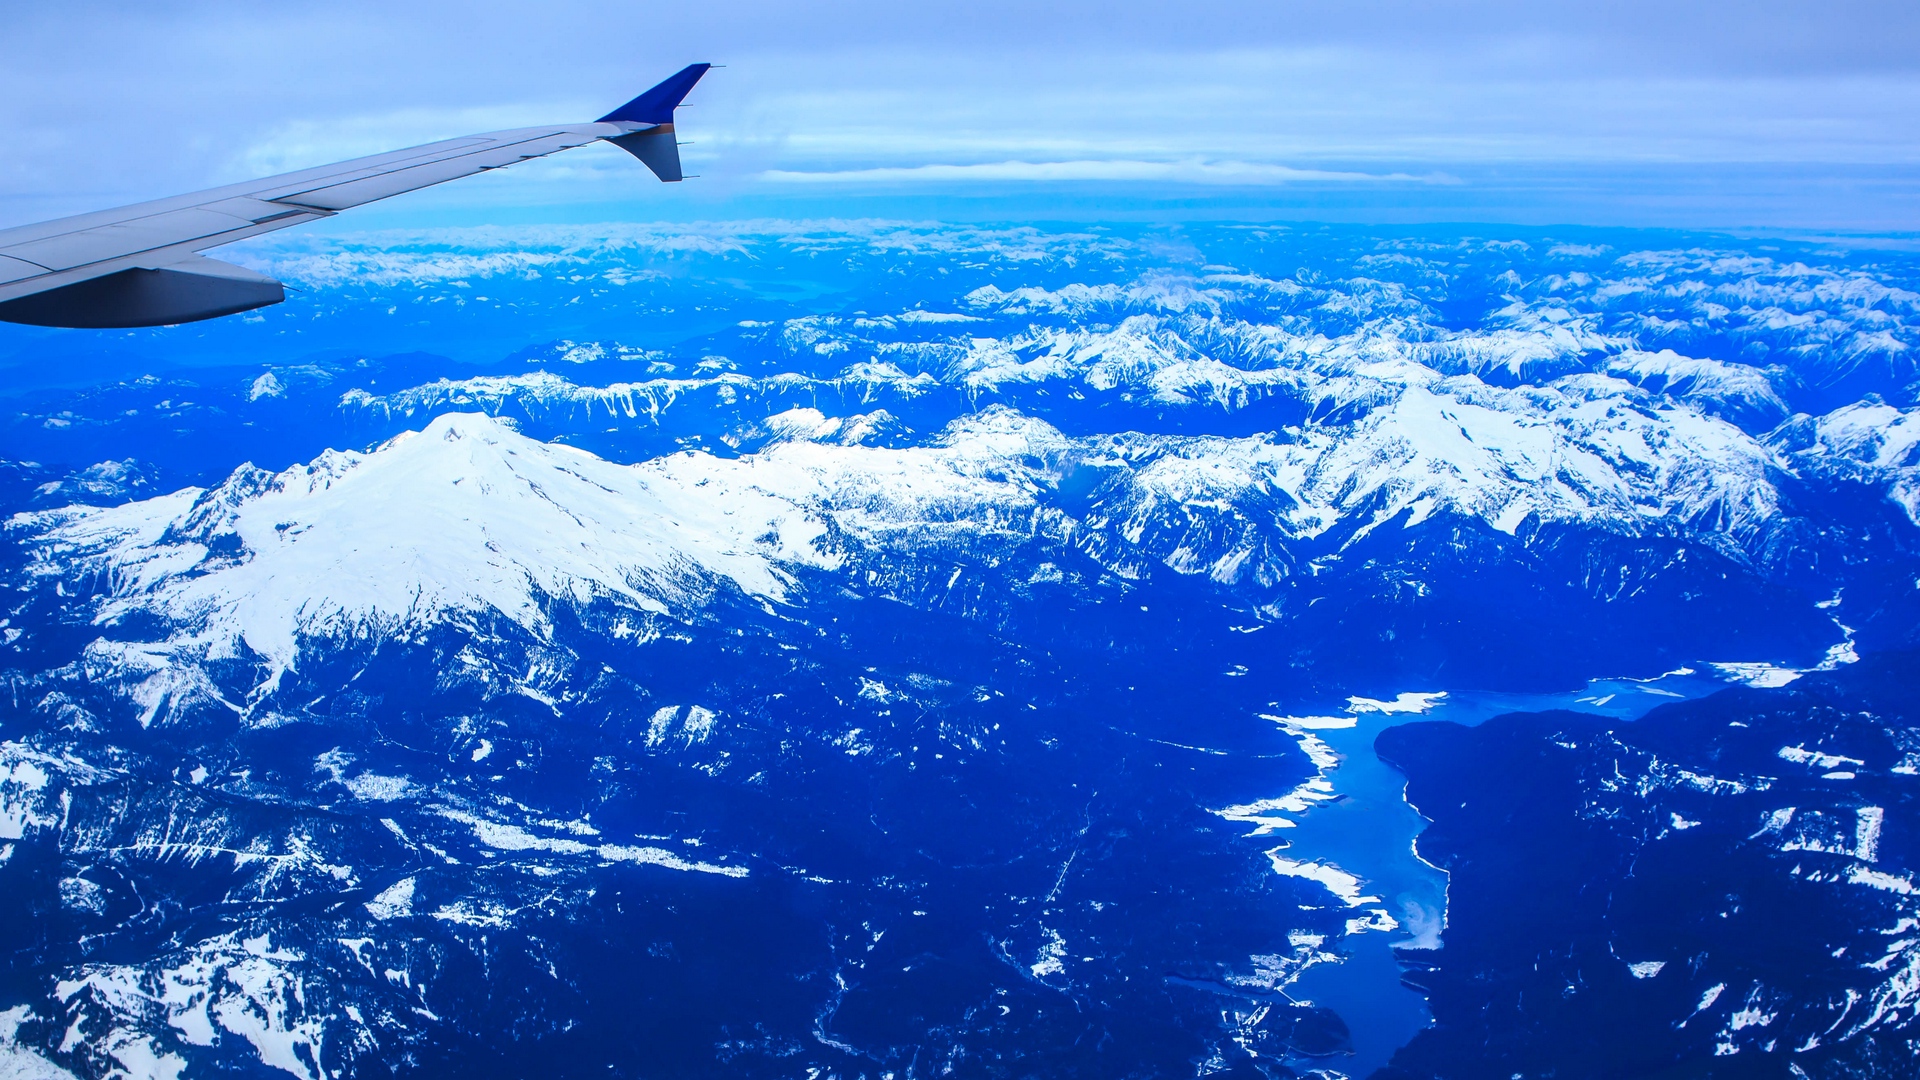 General 1920x1080 airplane airplane wing mountains peak Washington (state) USA blue snowy peak aircraft landscape vehicle